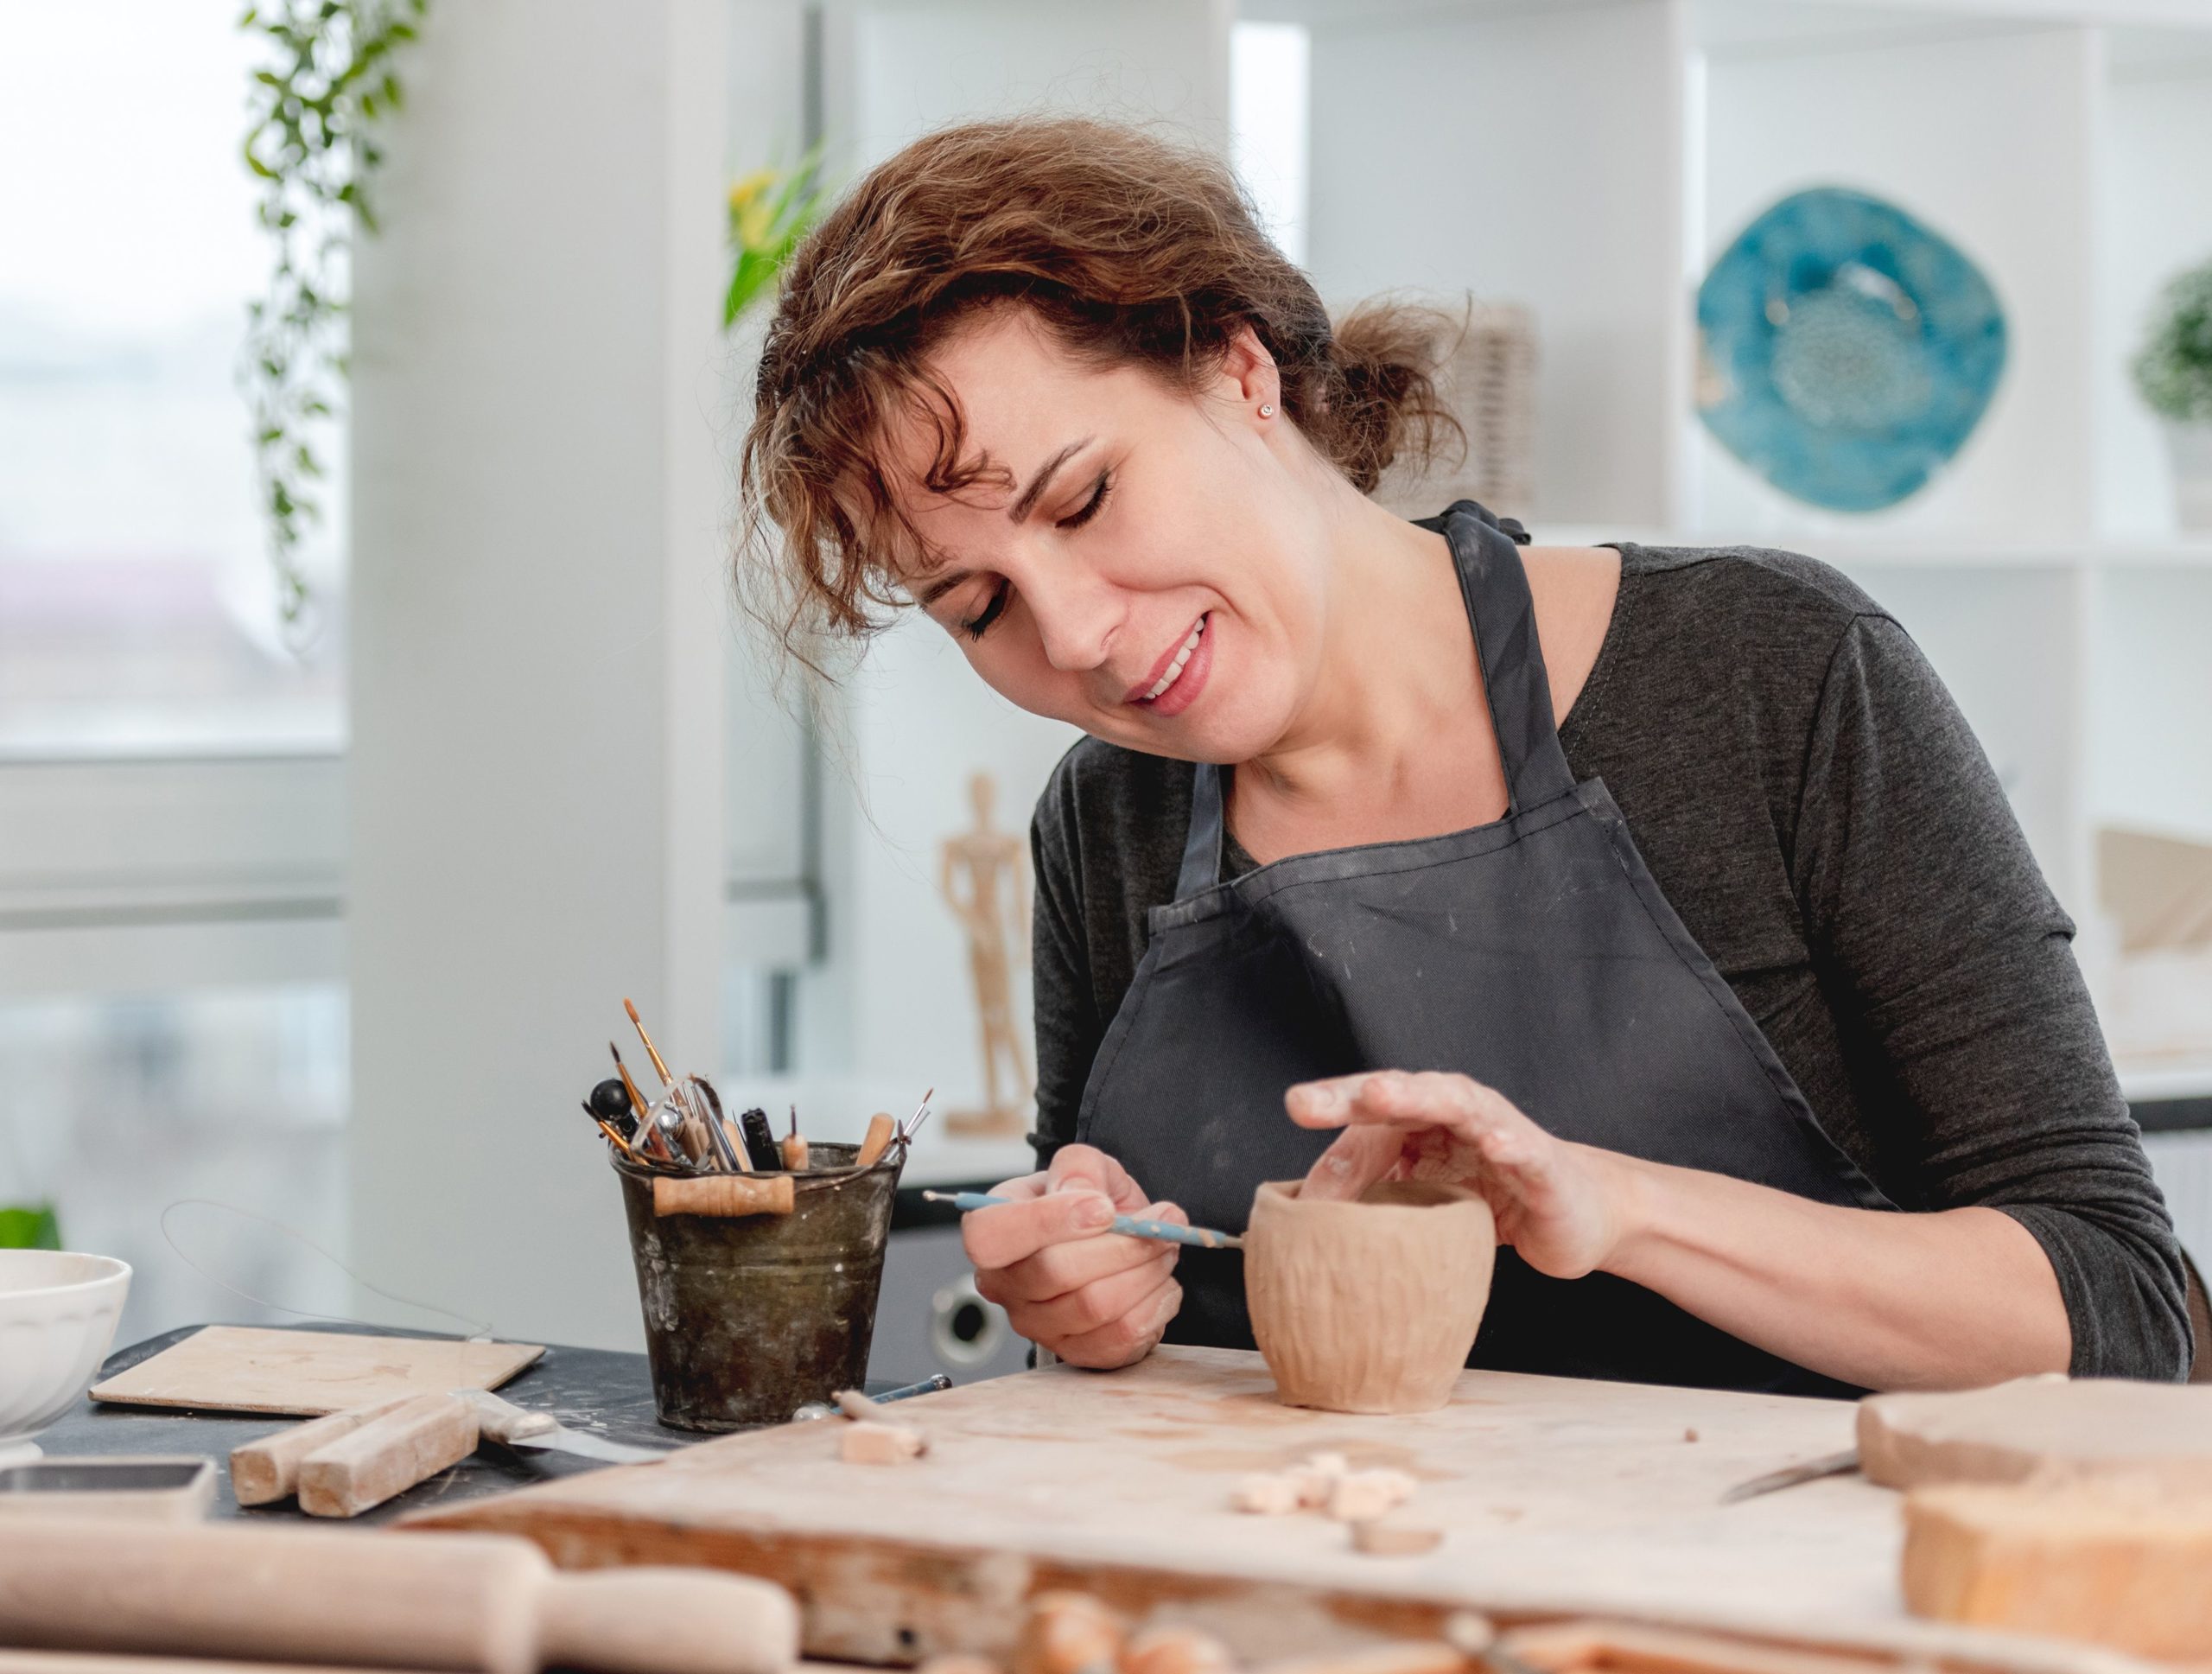 A woman smiles as she creates pottery.